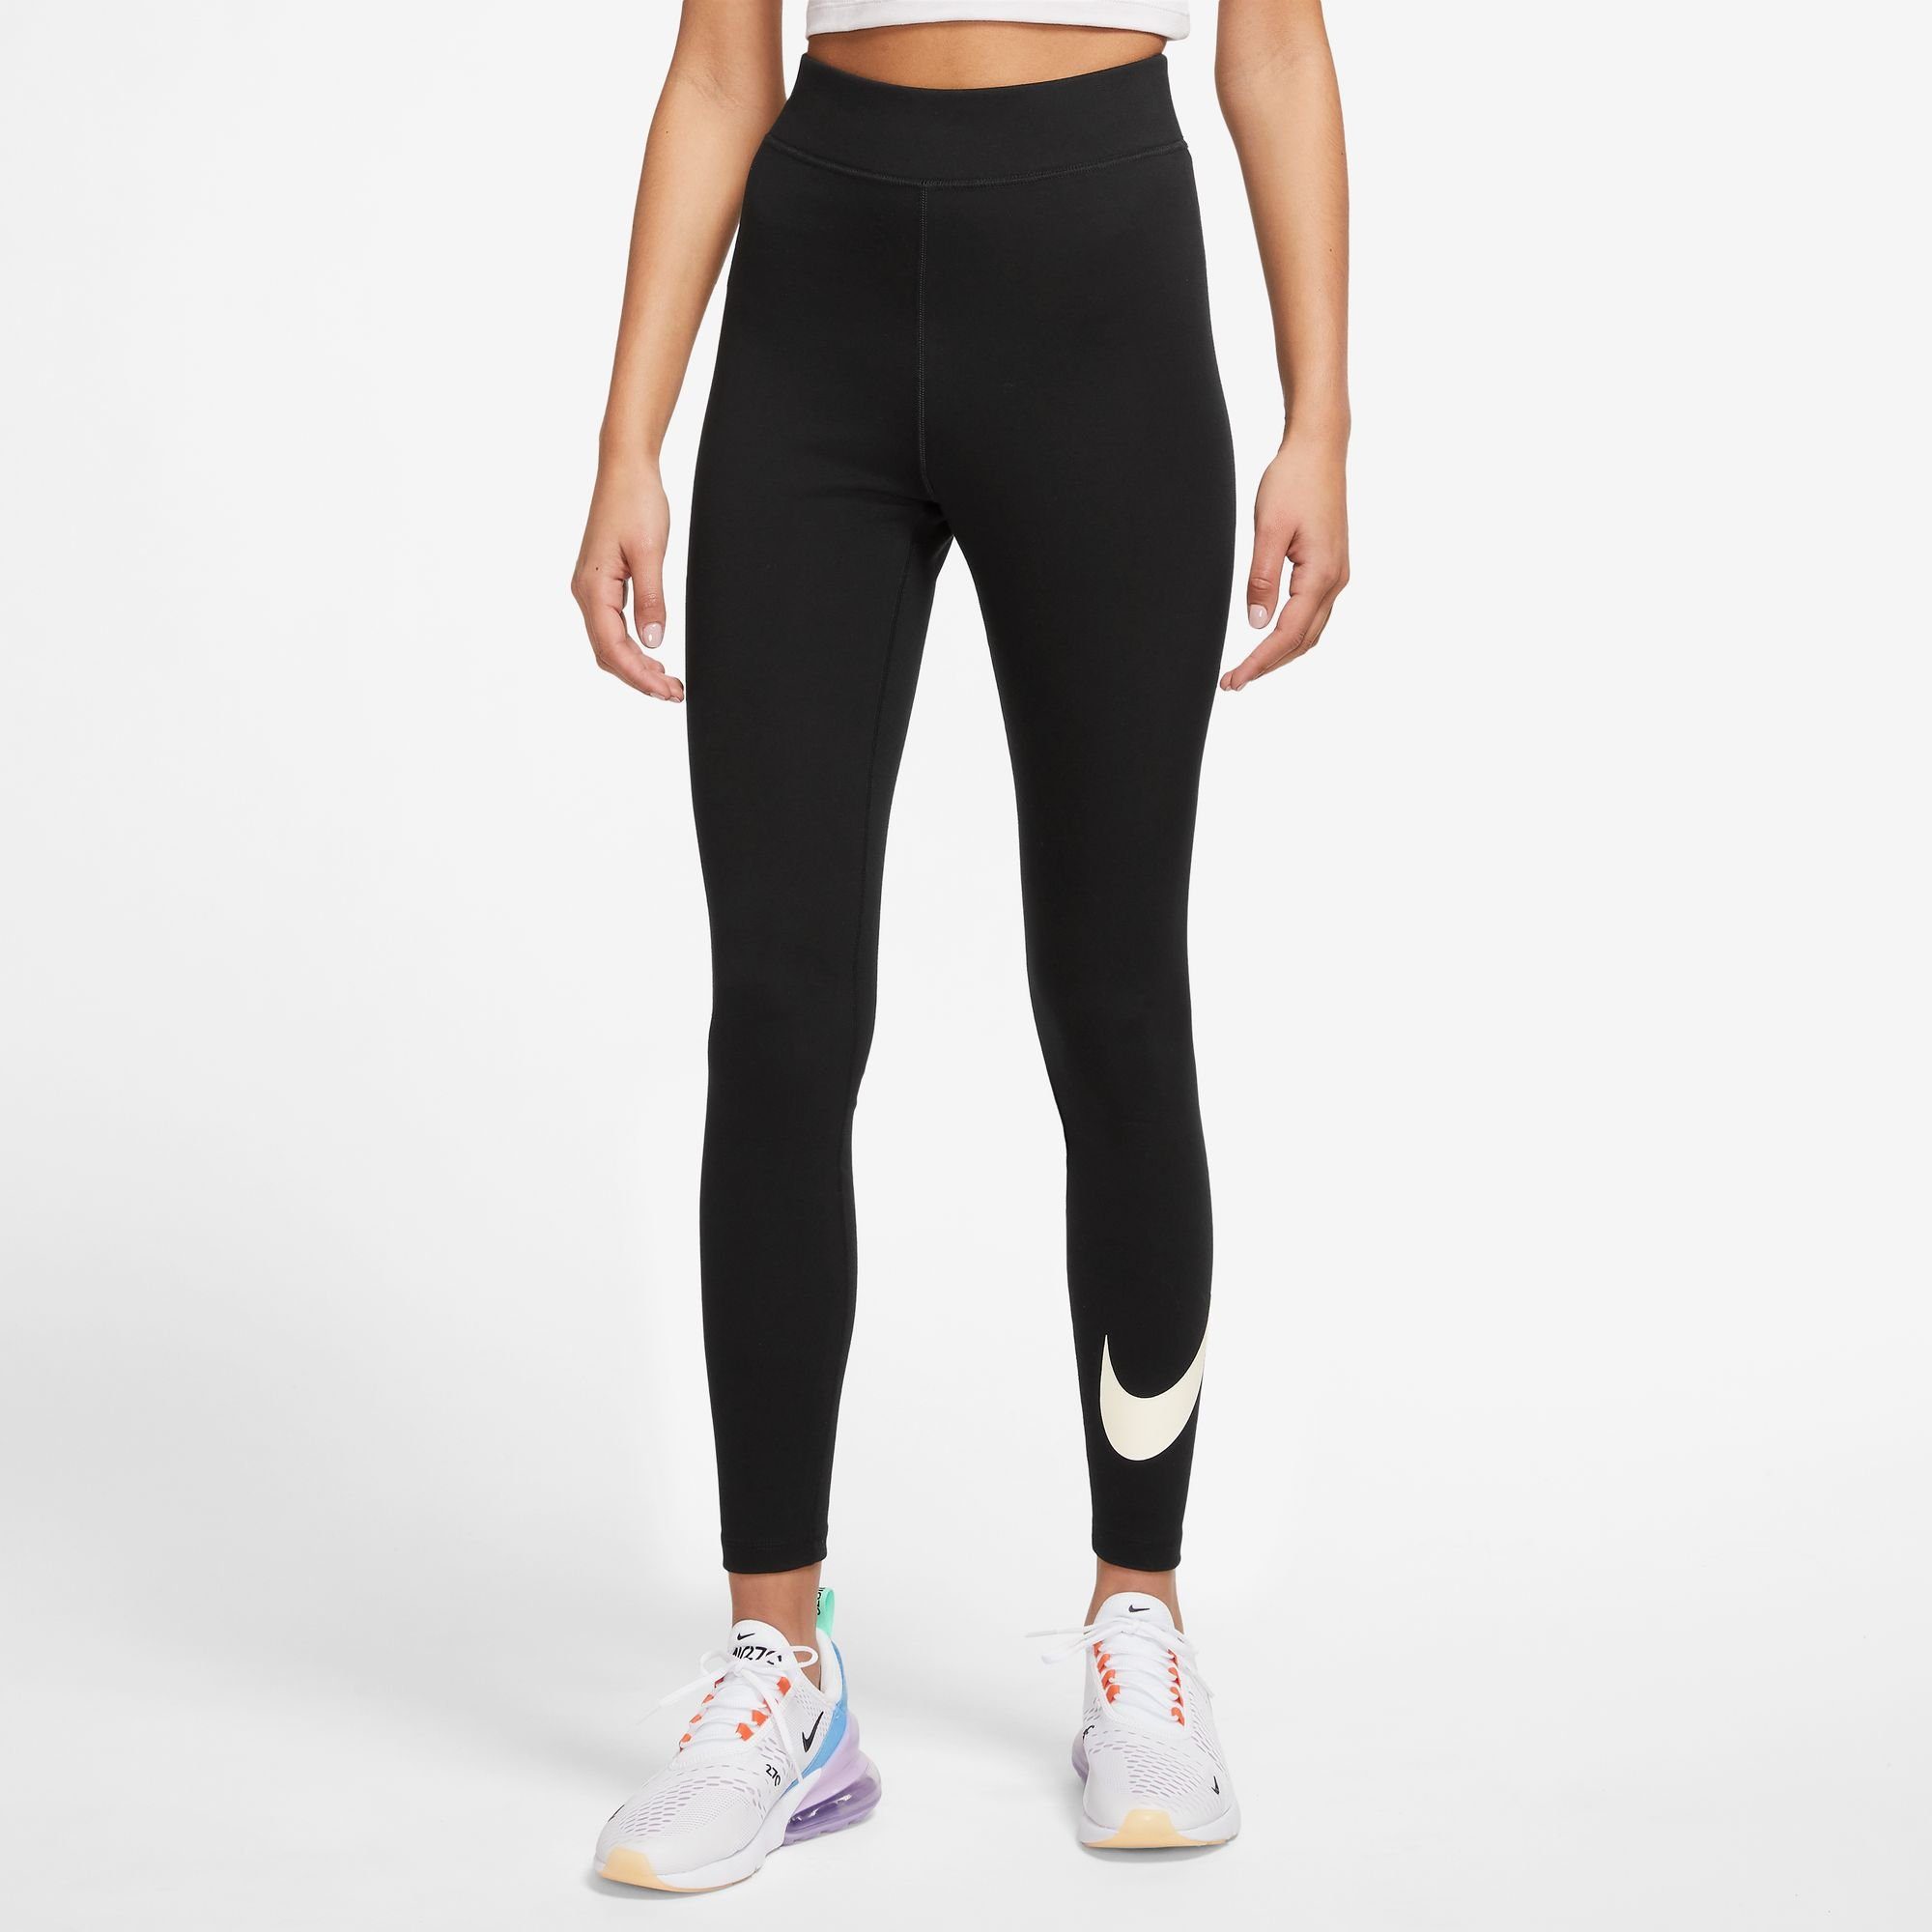 BLACK/SAIL HIGH-WAISTED Sportswear CLASSICS GRAPHIC Nike Leggings WOMEN'S LEGGINGS